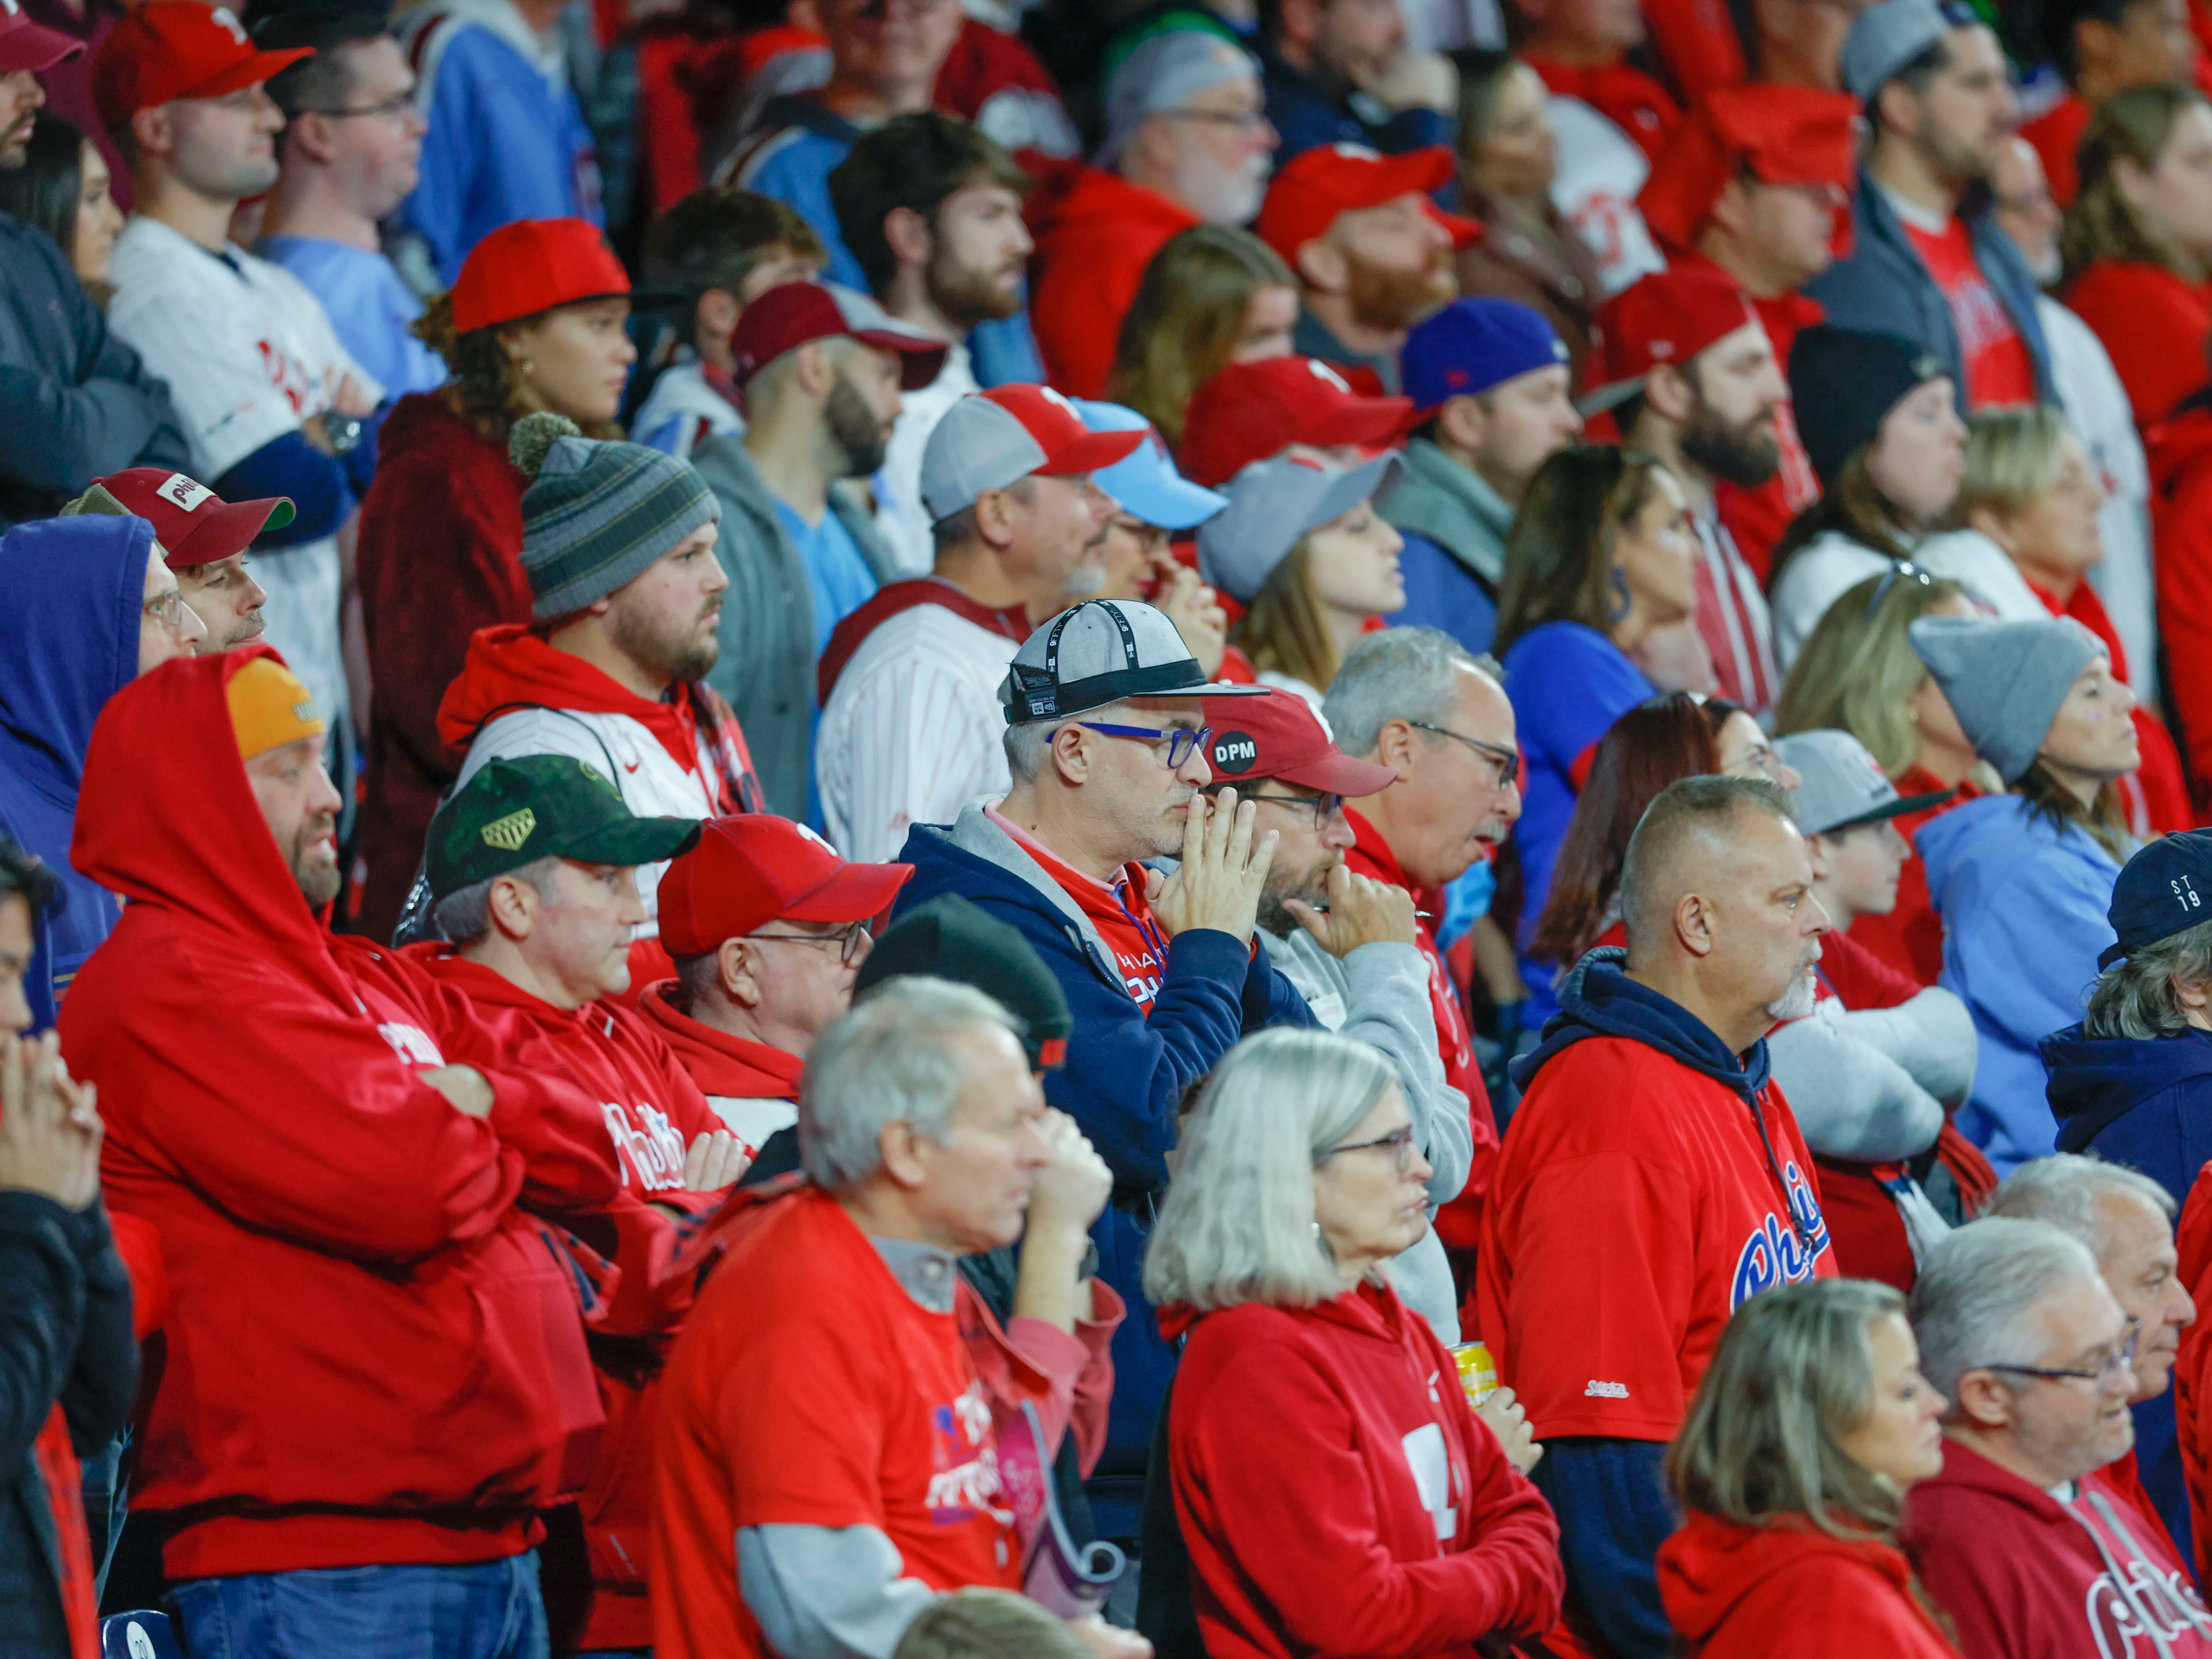 St. Louis Cardinals fans react as team announces new sleeve